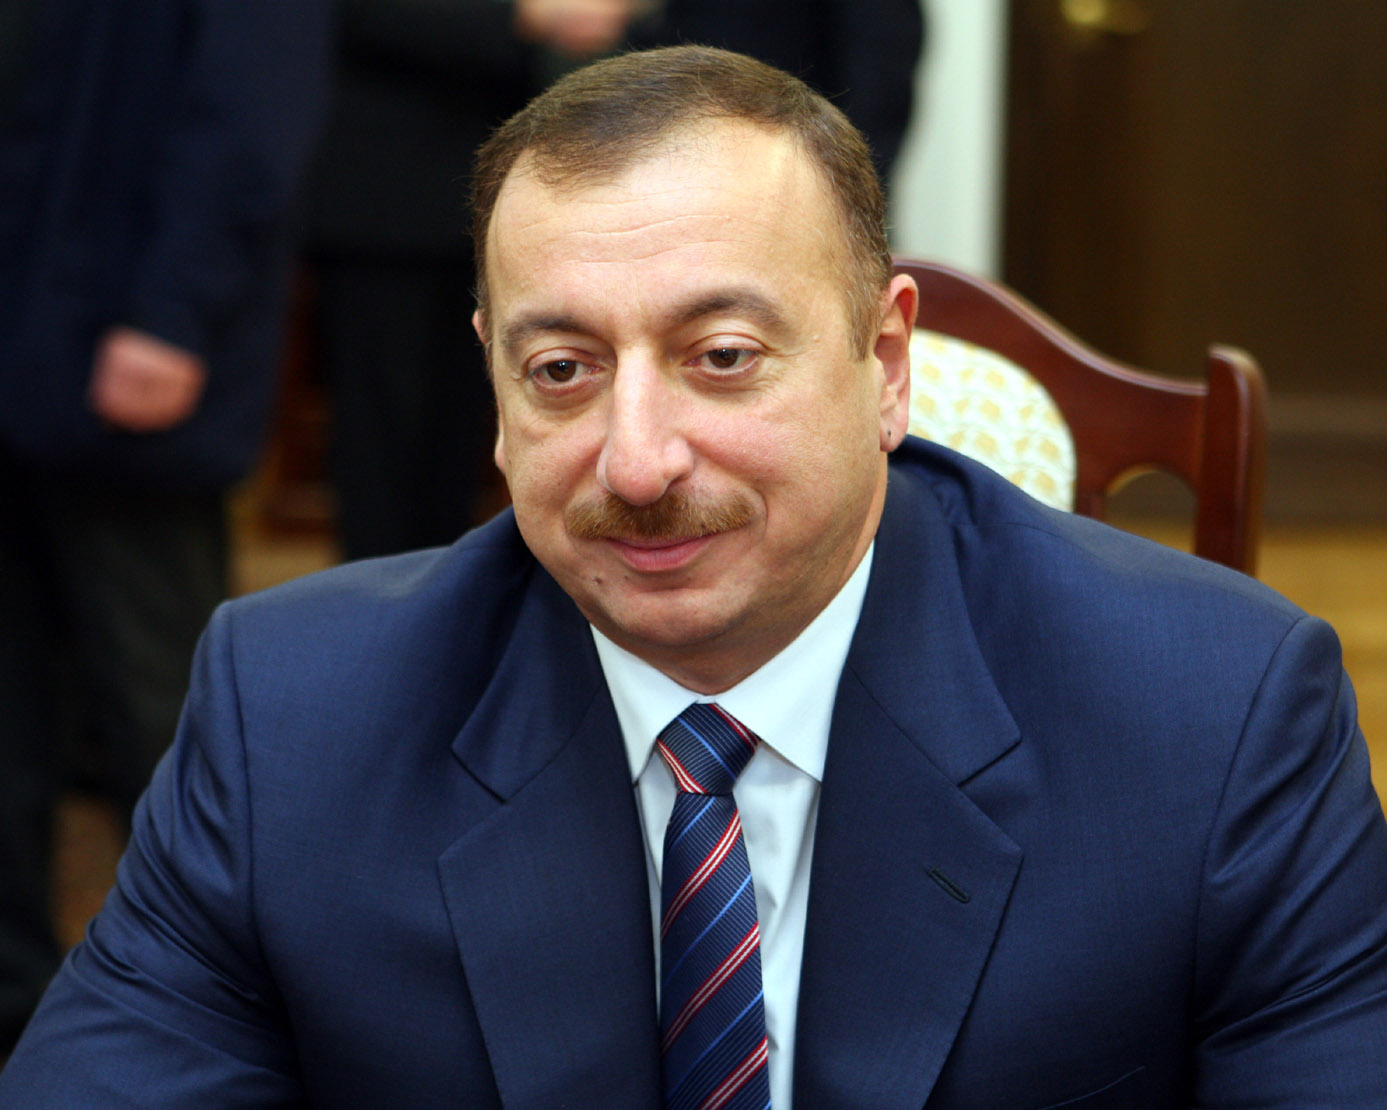 Илхам Алиев с изненадващ ход в Азербайджан